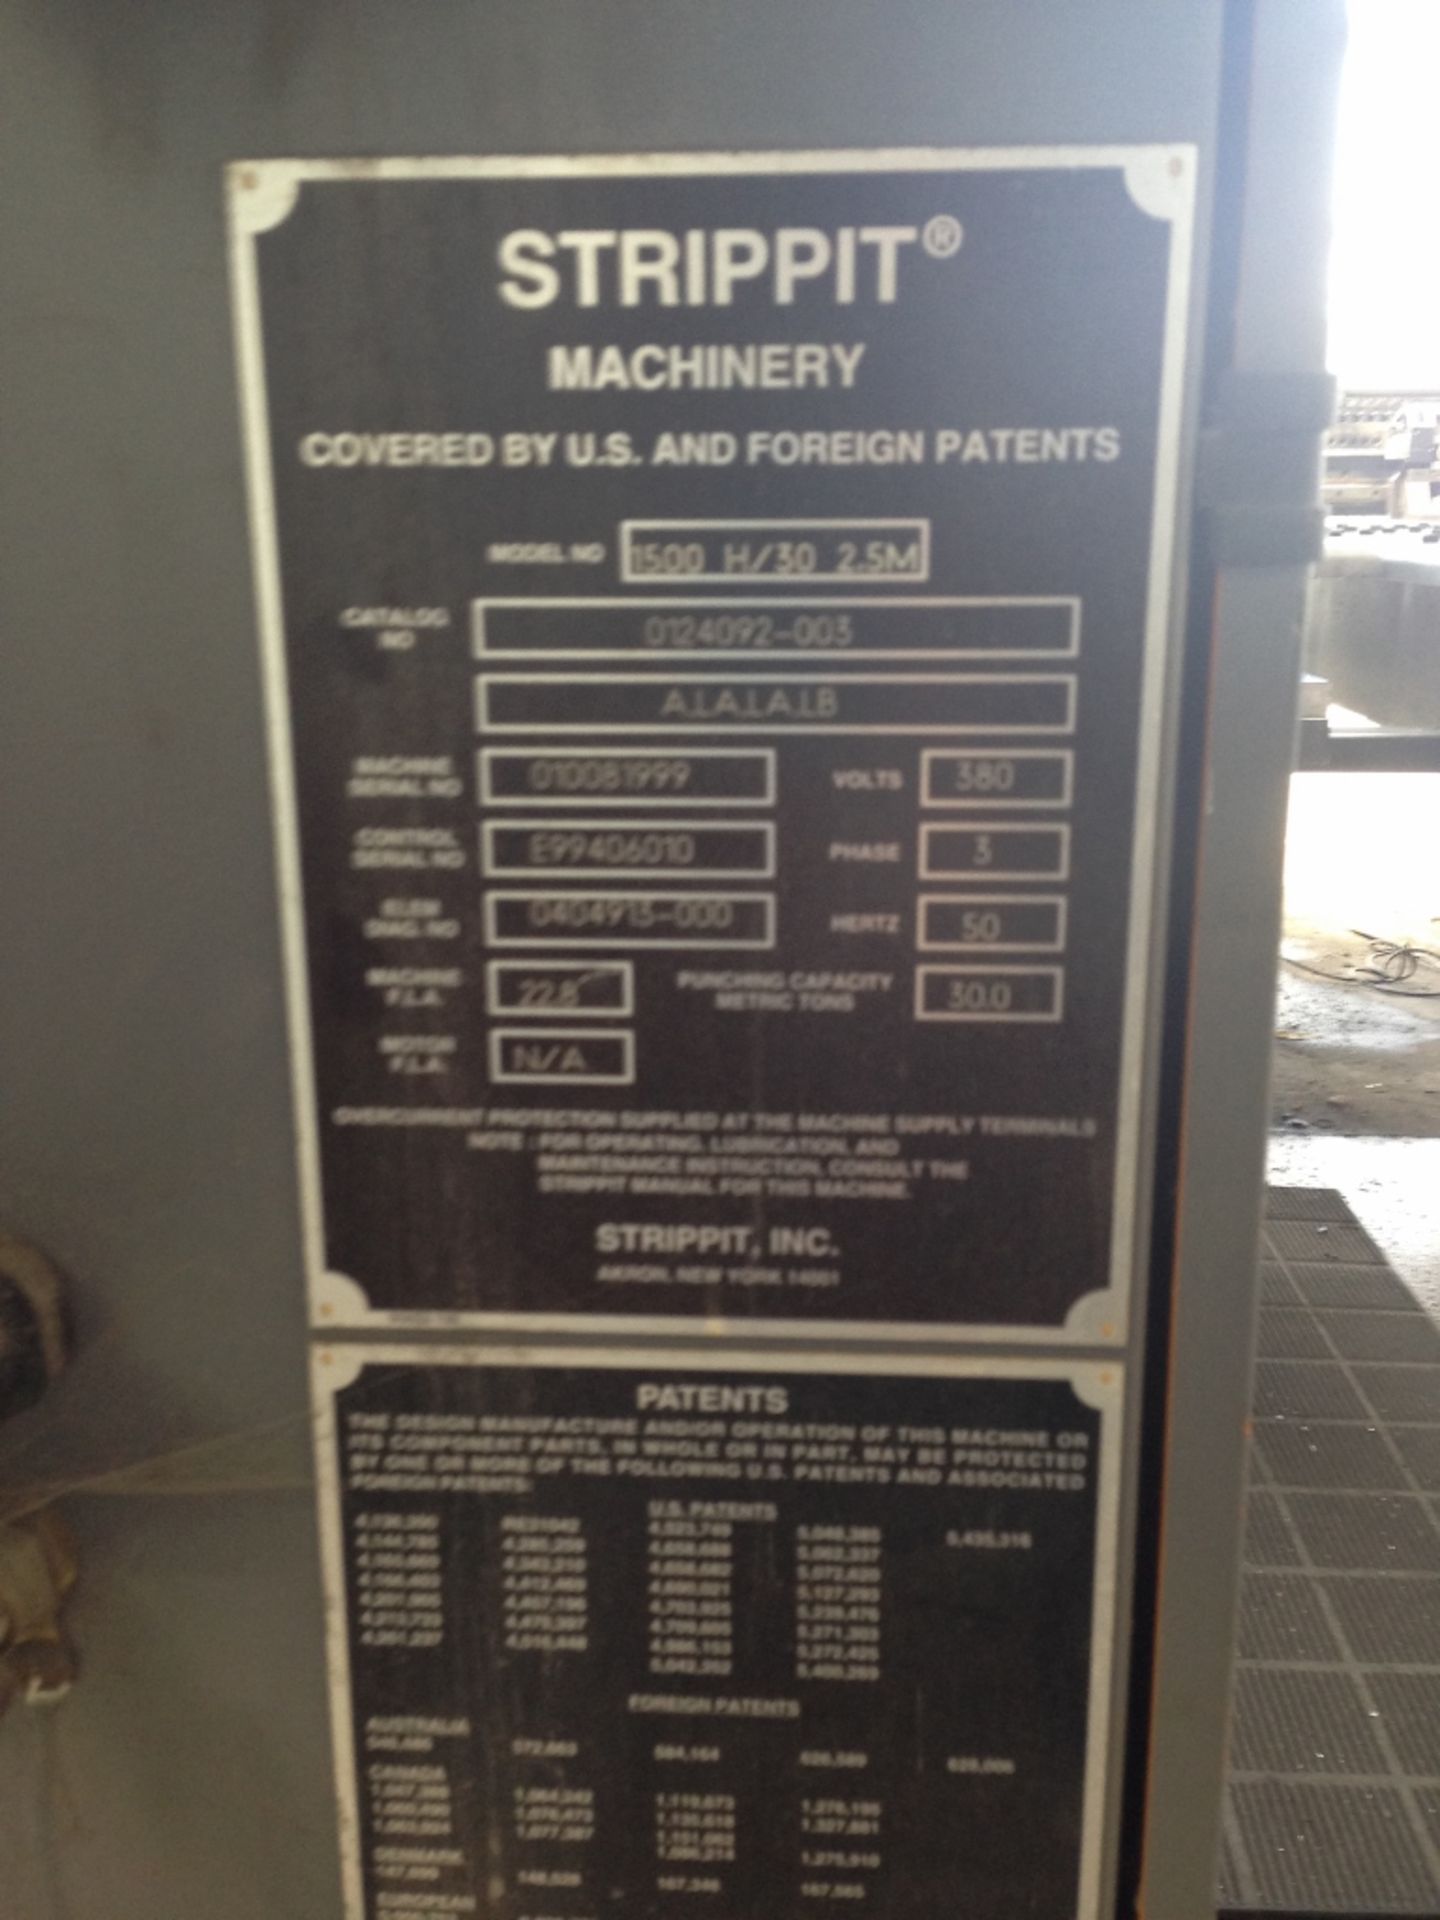 LVD 1500 N/30 2.5m Strippit 30 1500H Smart stroke. Catalog No. 0124092-003 A, LA, LA, LB. 30.0 Ton - Image 3 of 3